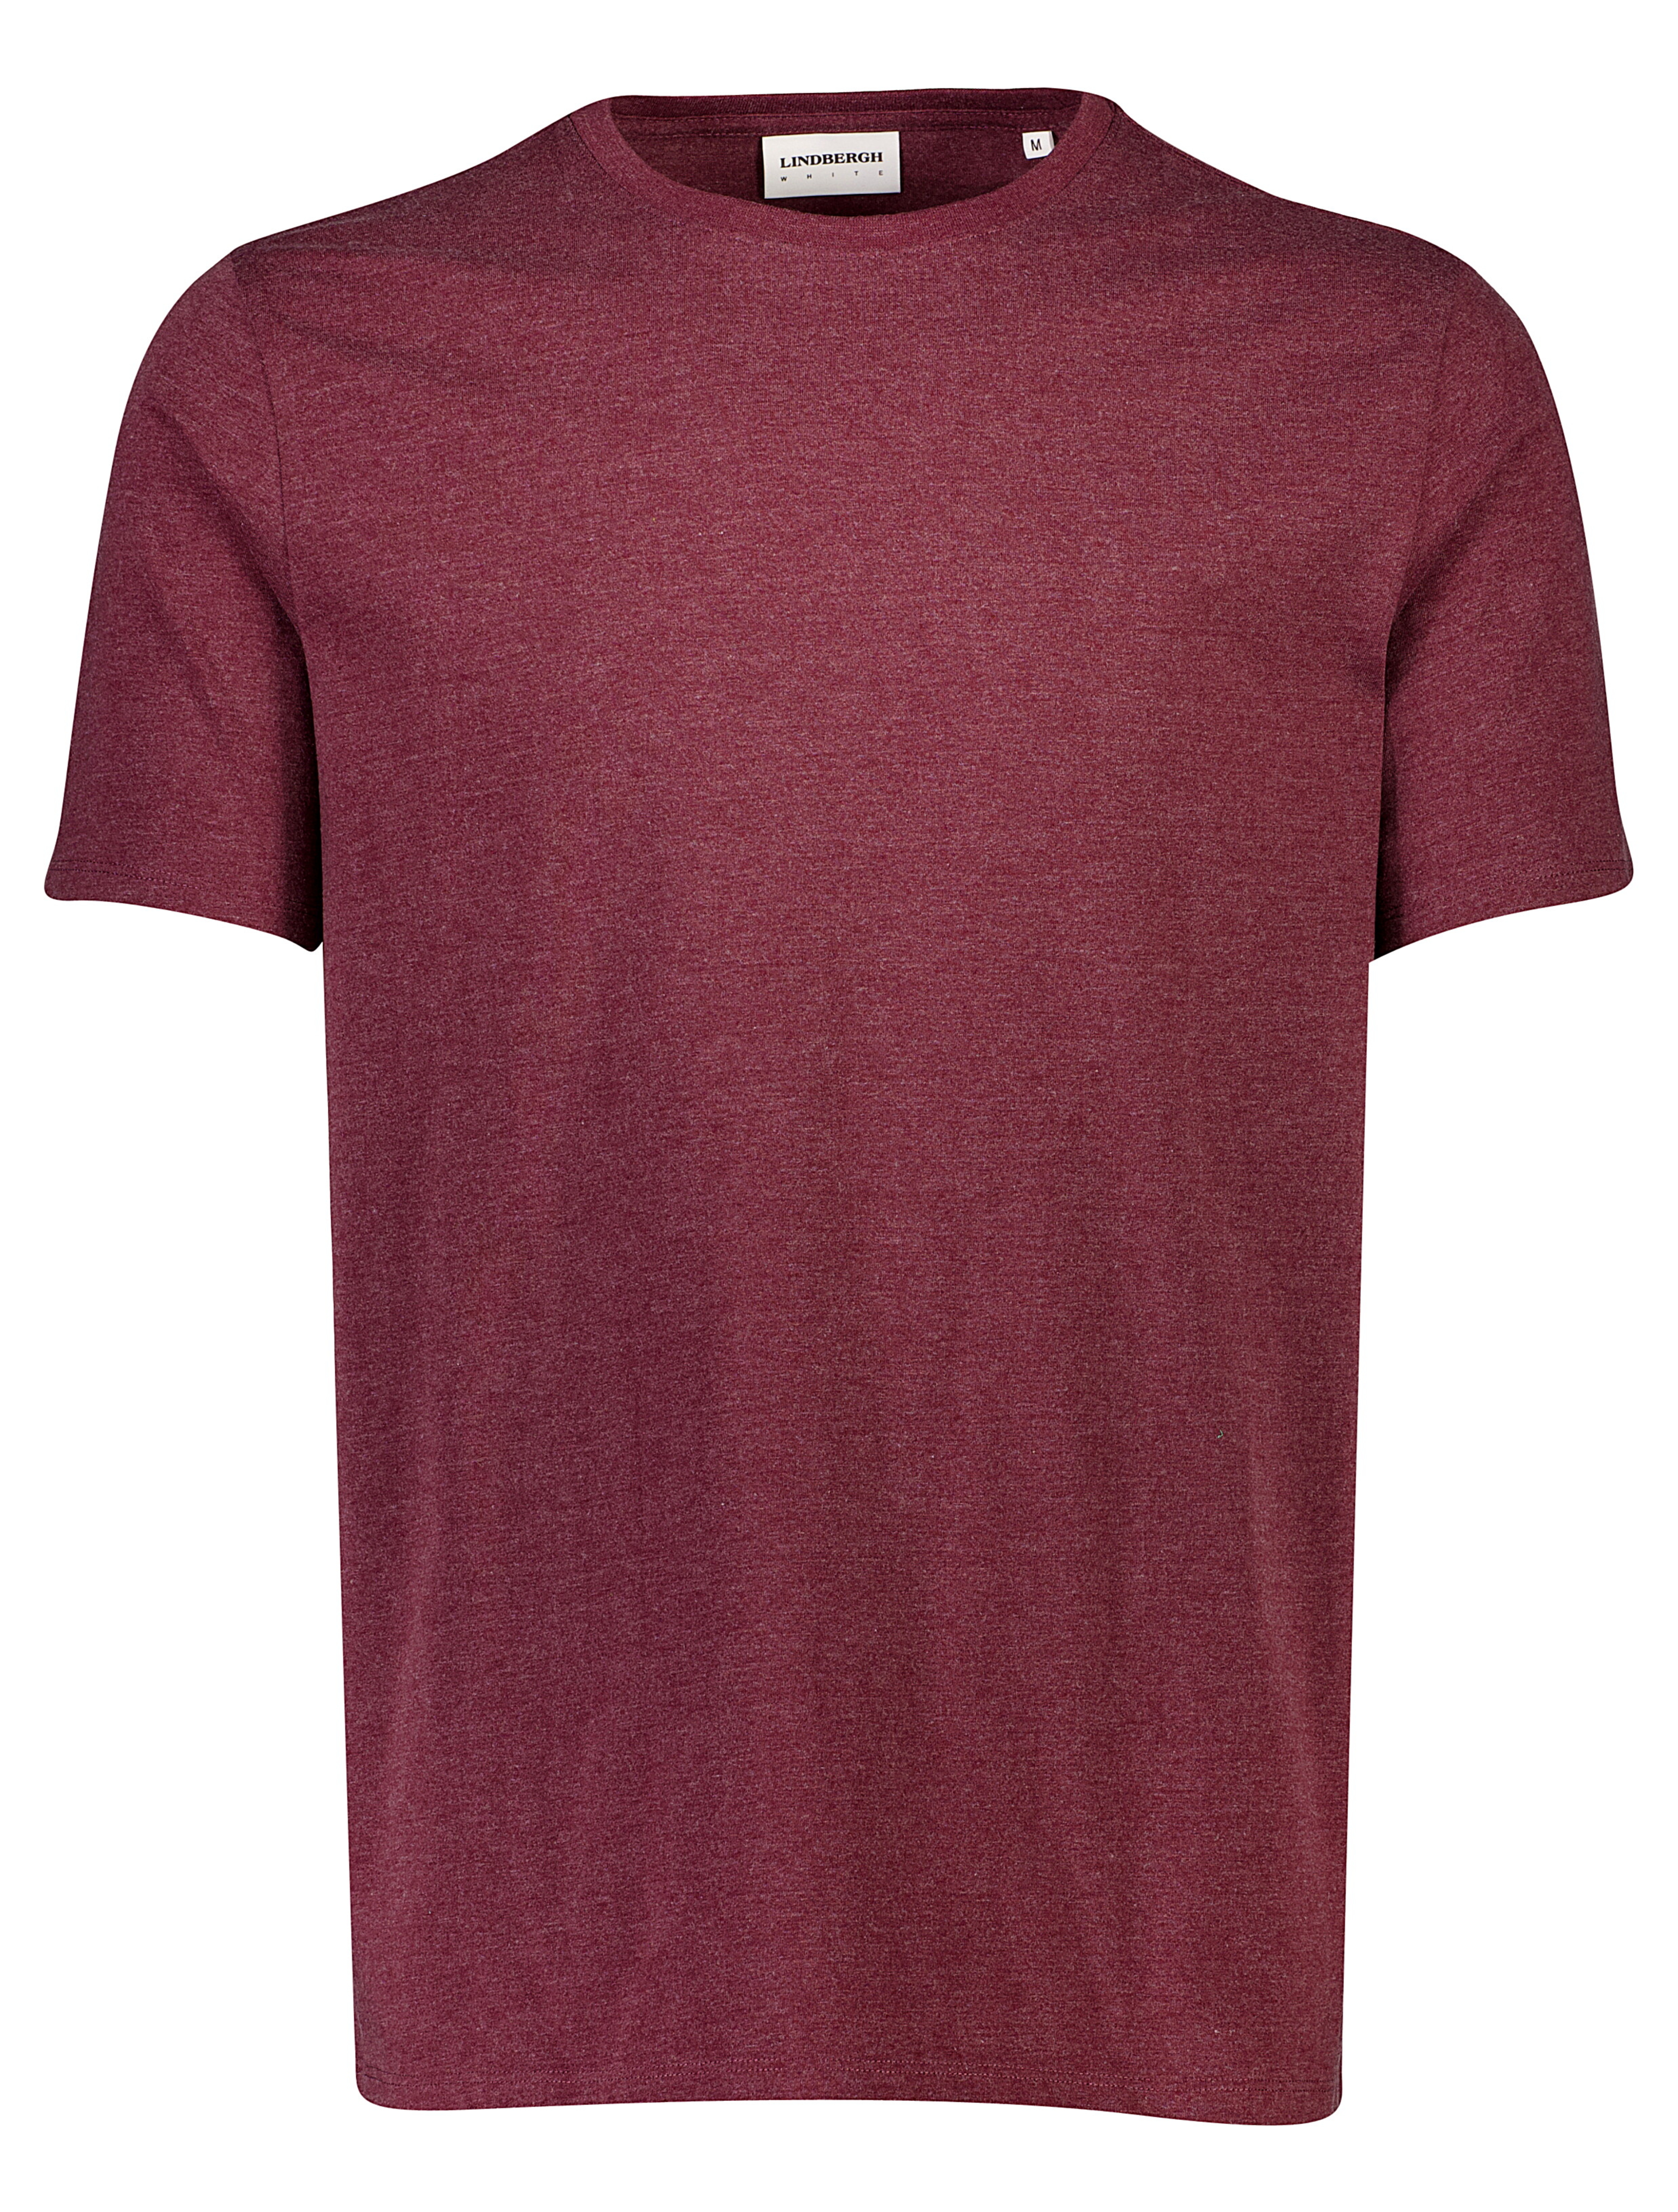 Lindbergh T-Shirt rot / burgundy mel